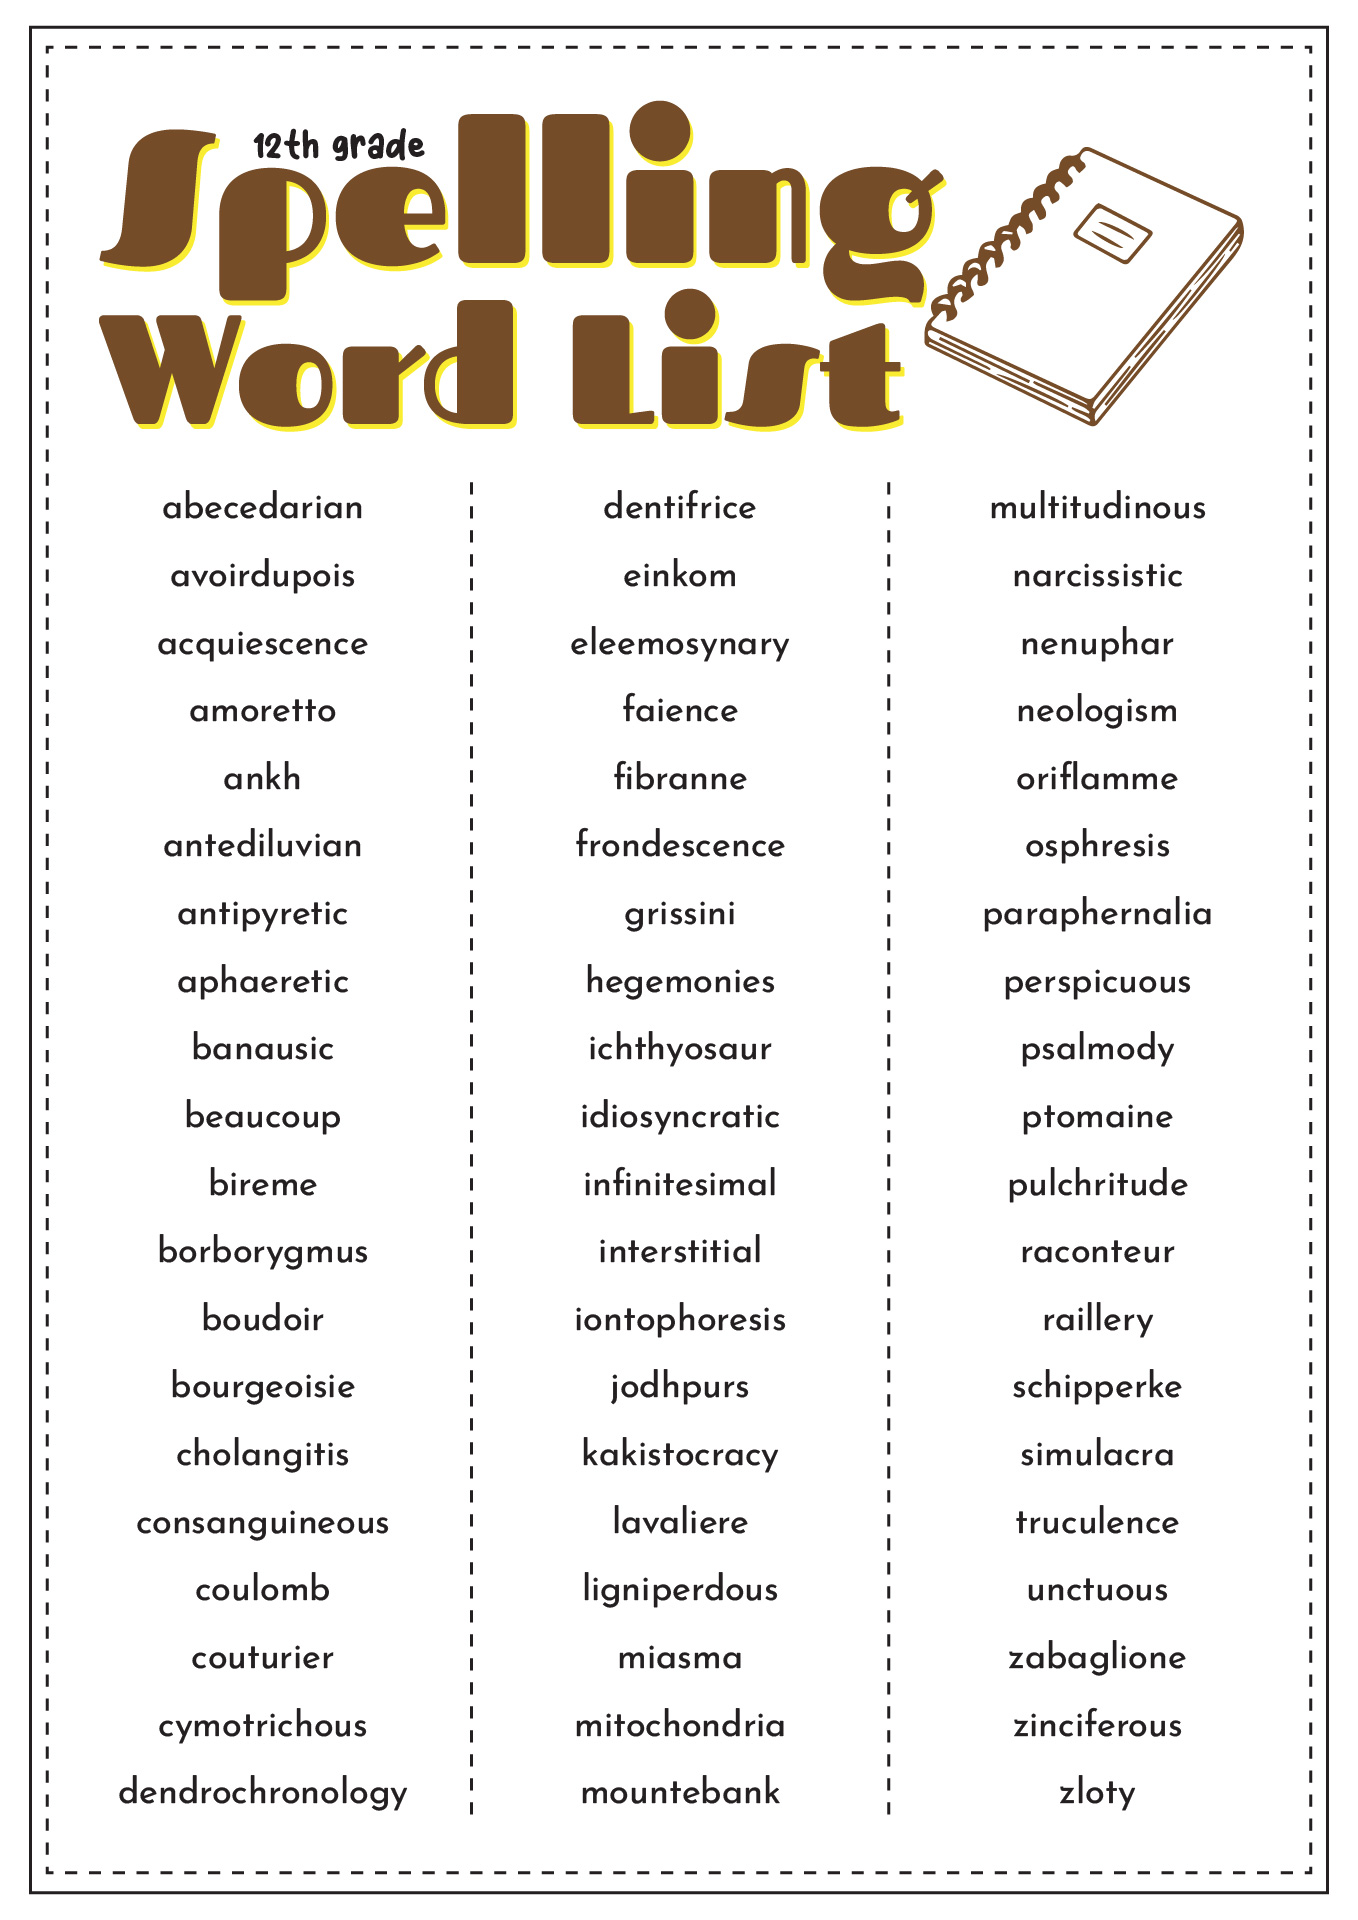 12th Grade Spelling Word List Image